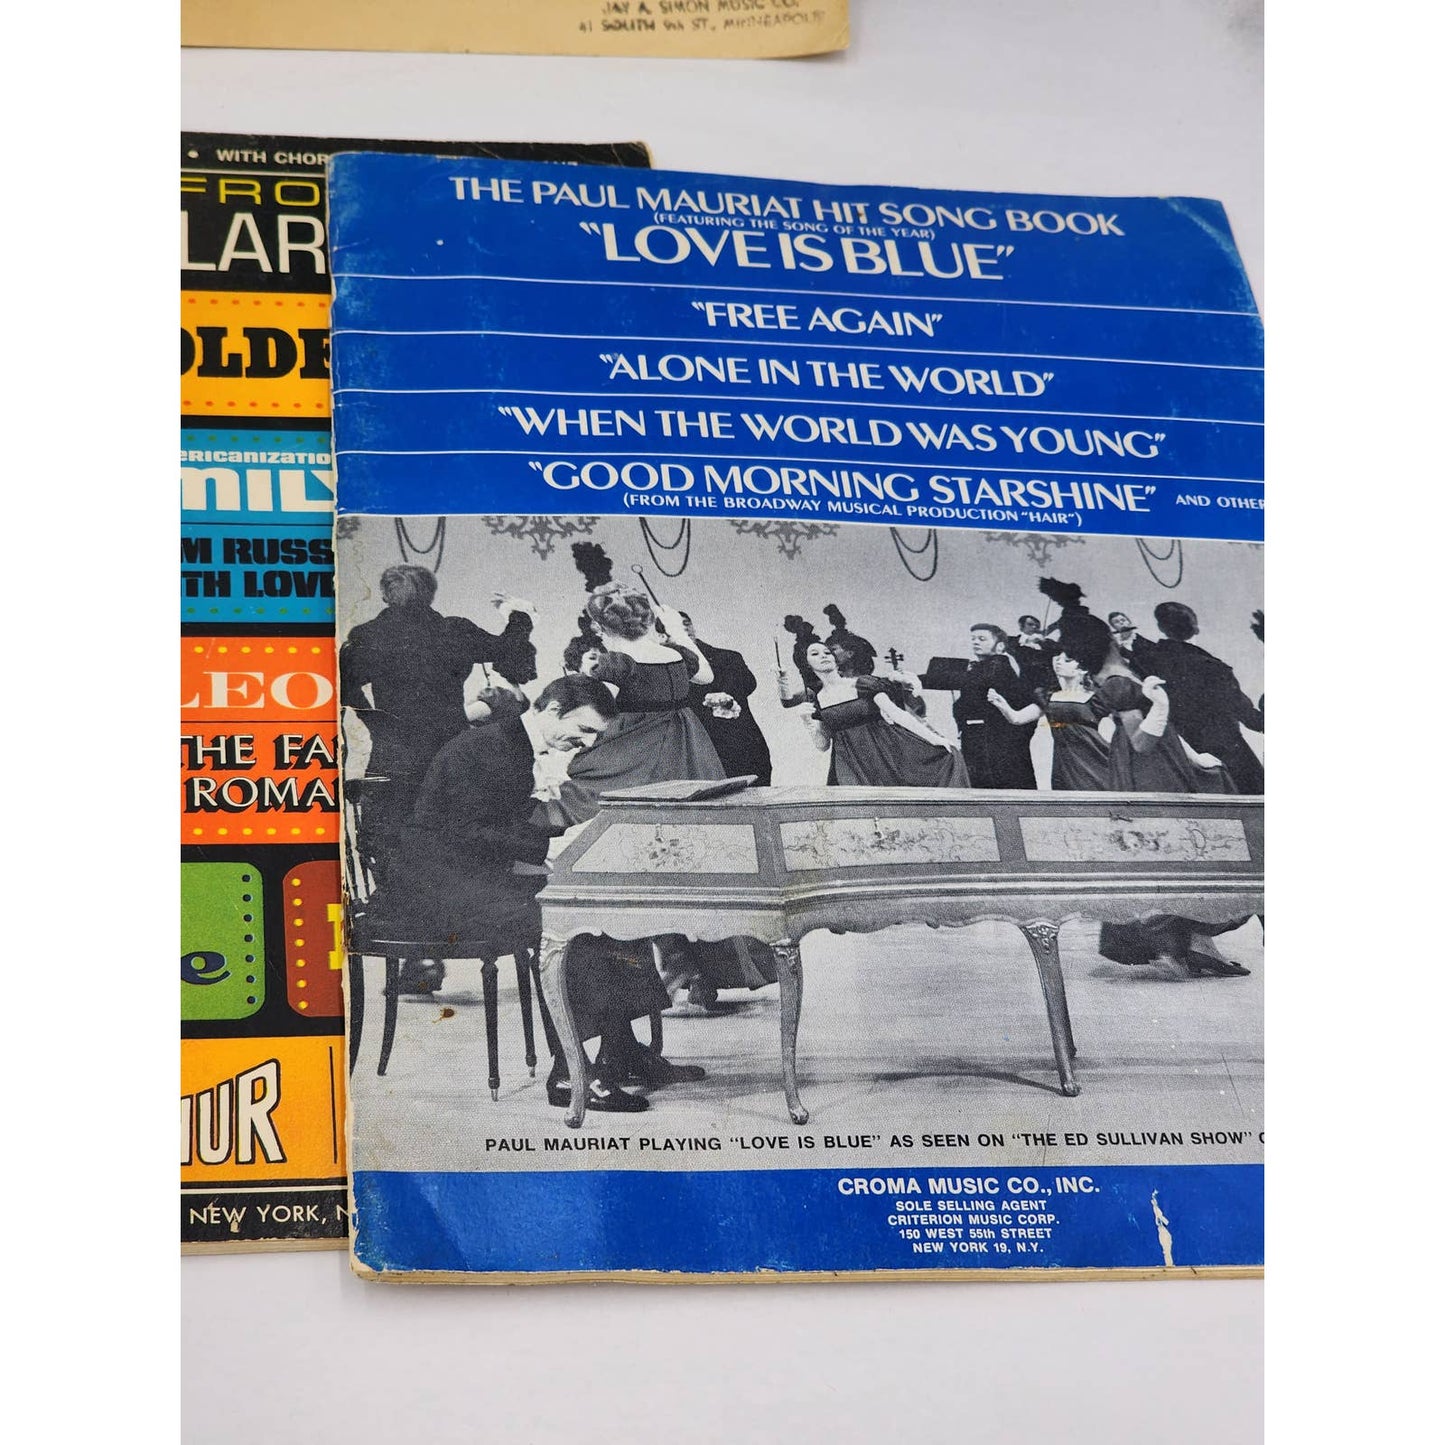 Vintage Piano Sheet Music  Rhythmic Variety Eastern Star Marches Star Dance Love